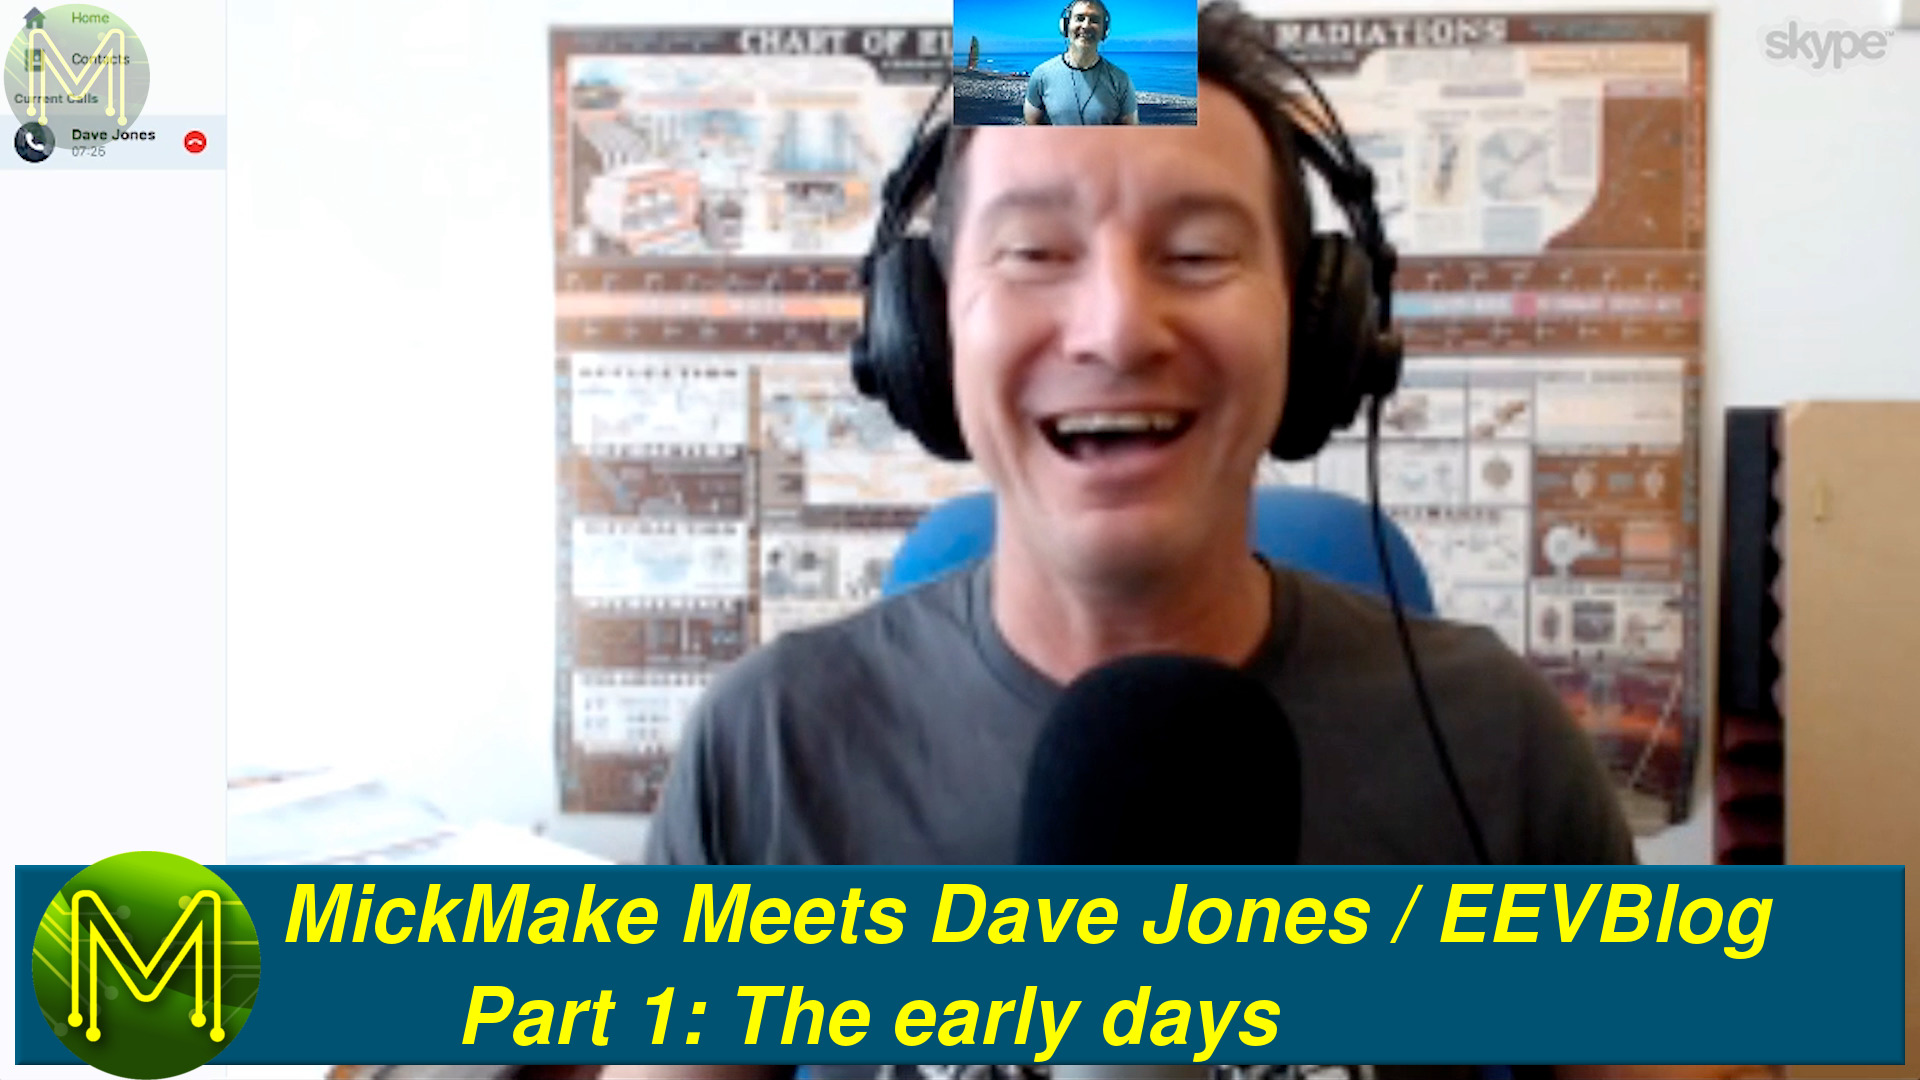 MickMake Meets: Dave Jones / EEVBlog - Part 1: The early days